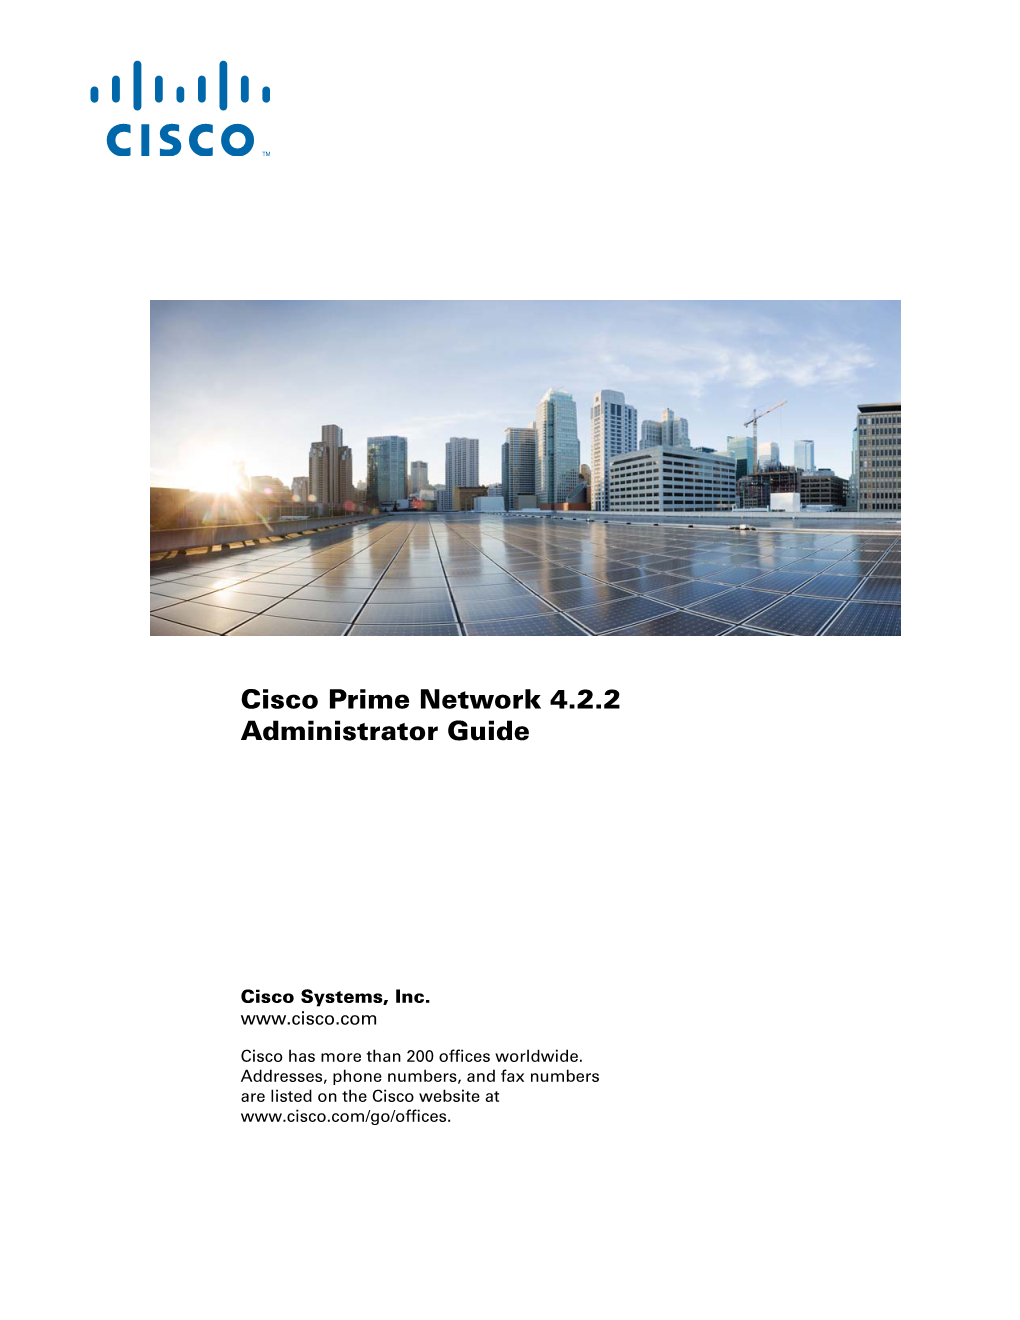 Cisco Prime Network Administrator Guide, 4.2.2